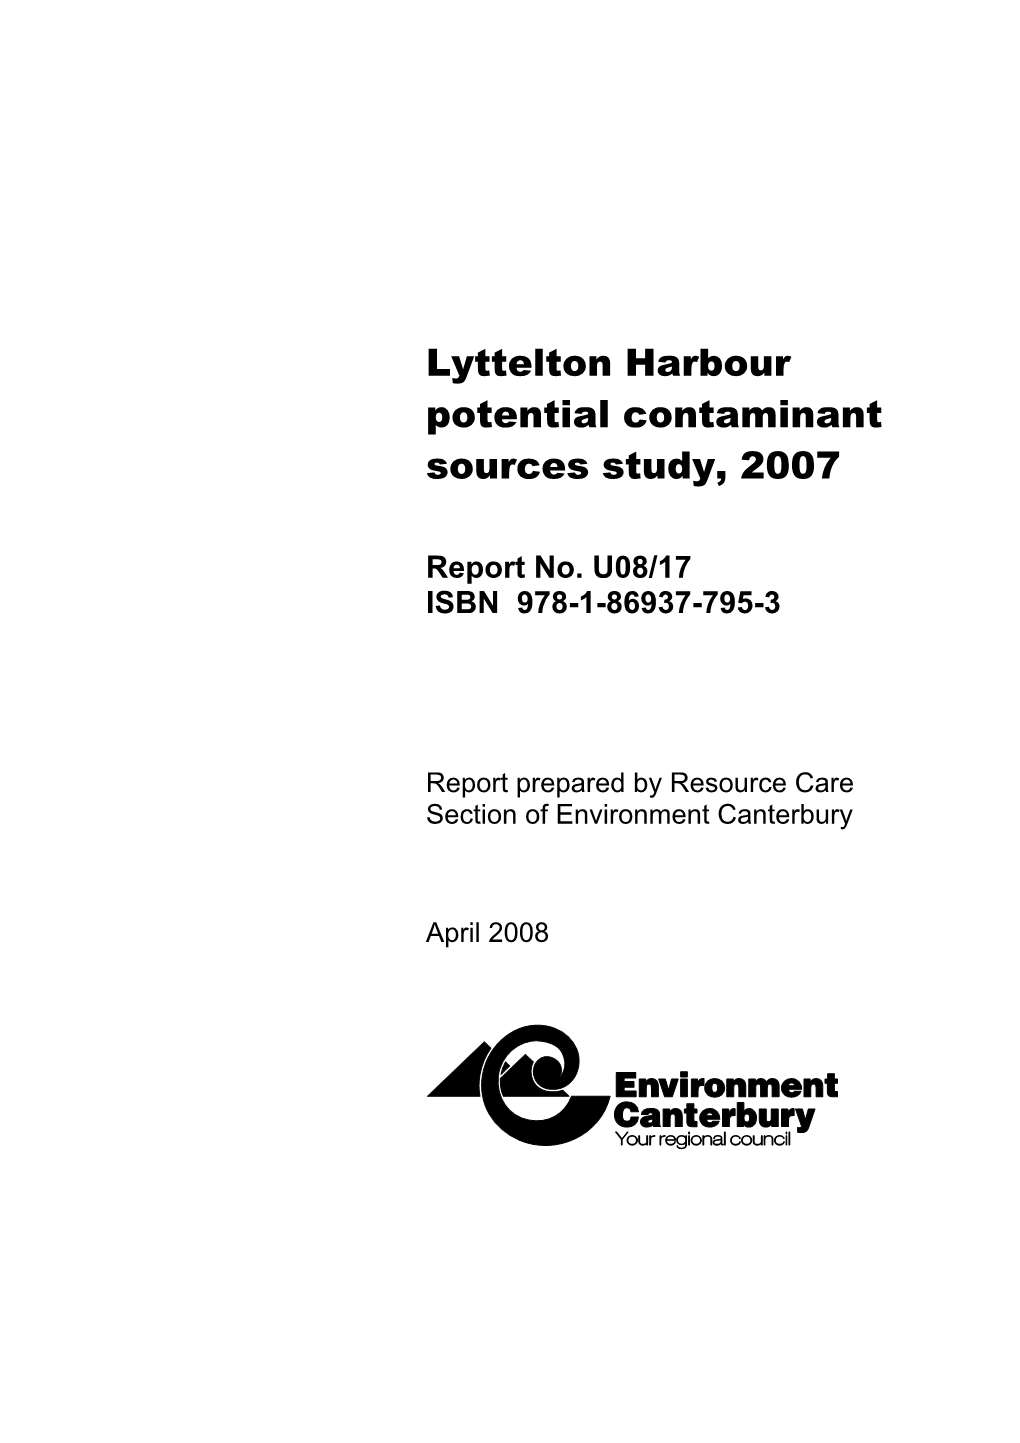 Lyttelton Harbour Potential Contaminants Study